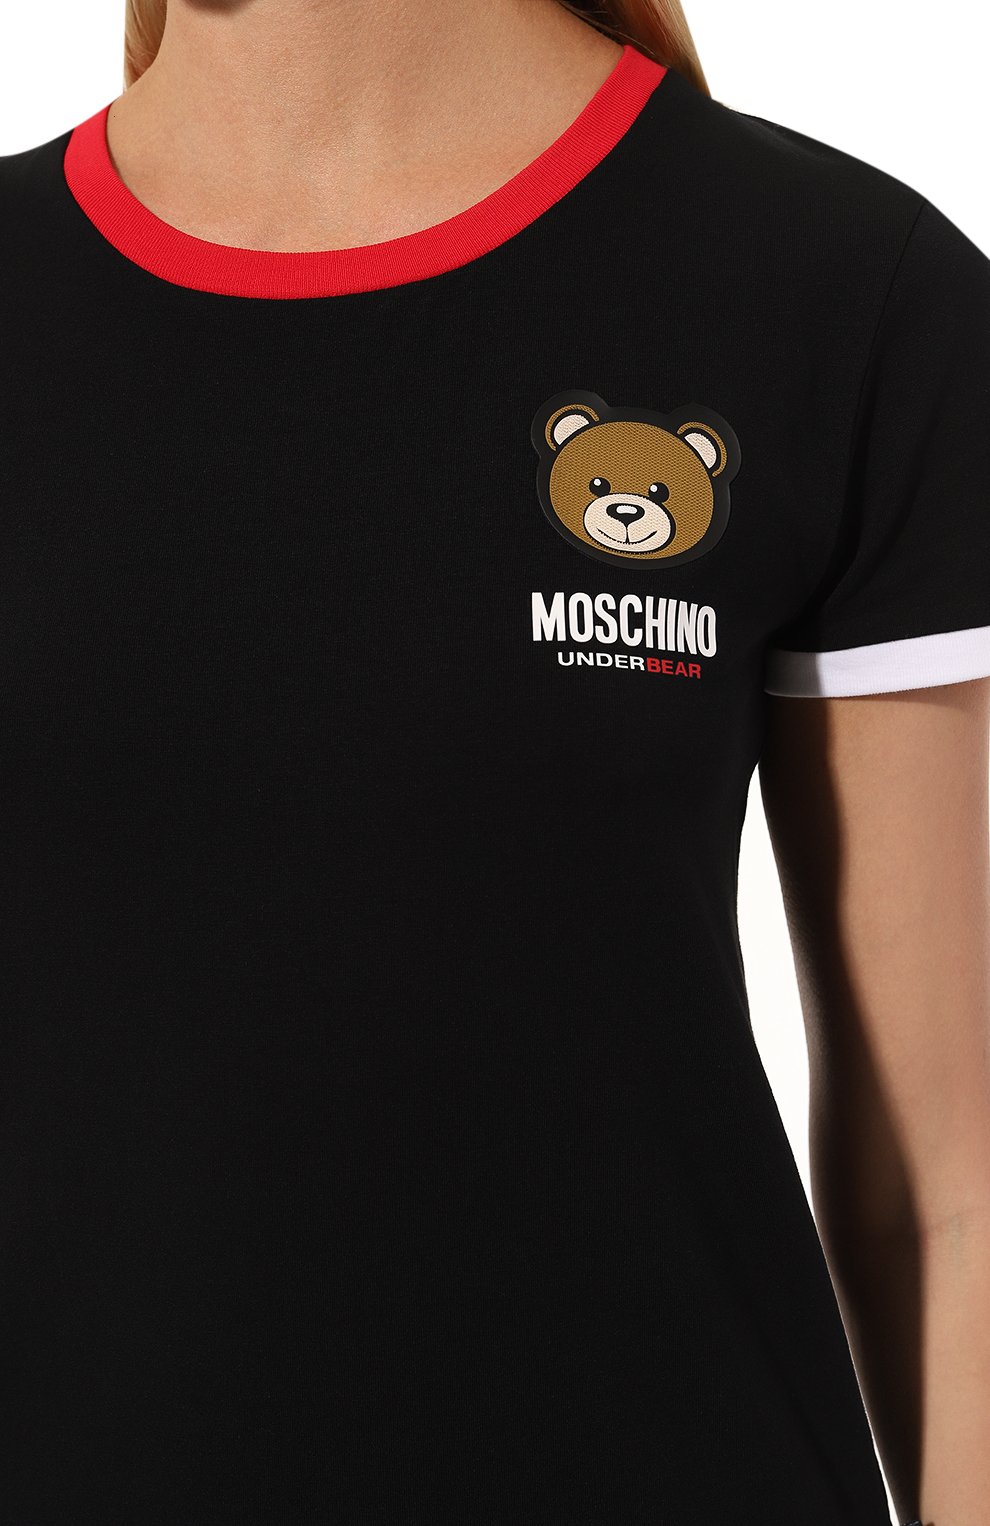 Хлопковая футболка Moschino 232V6/V0710/4410, цвет чёрный, размер 46 232V6/V0710/4410 - фото 5